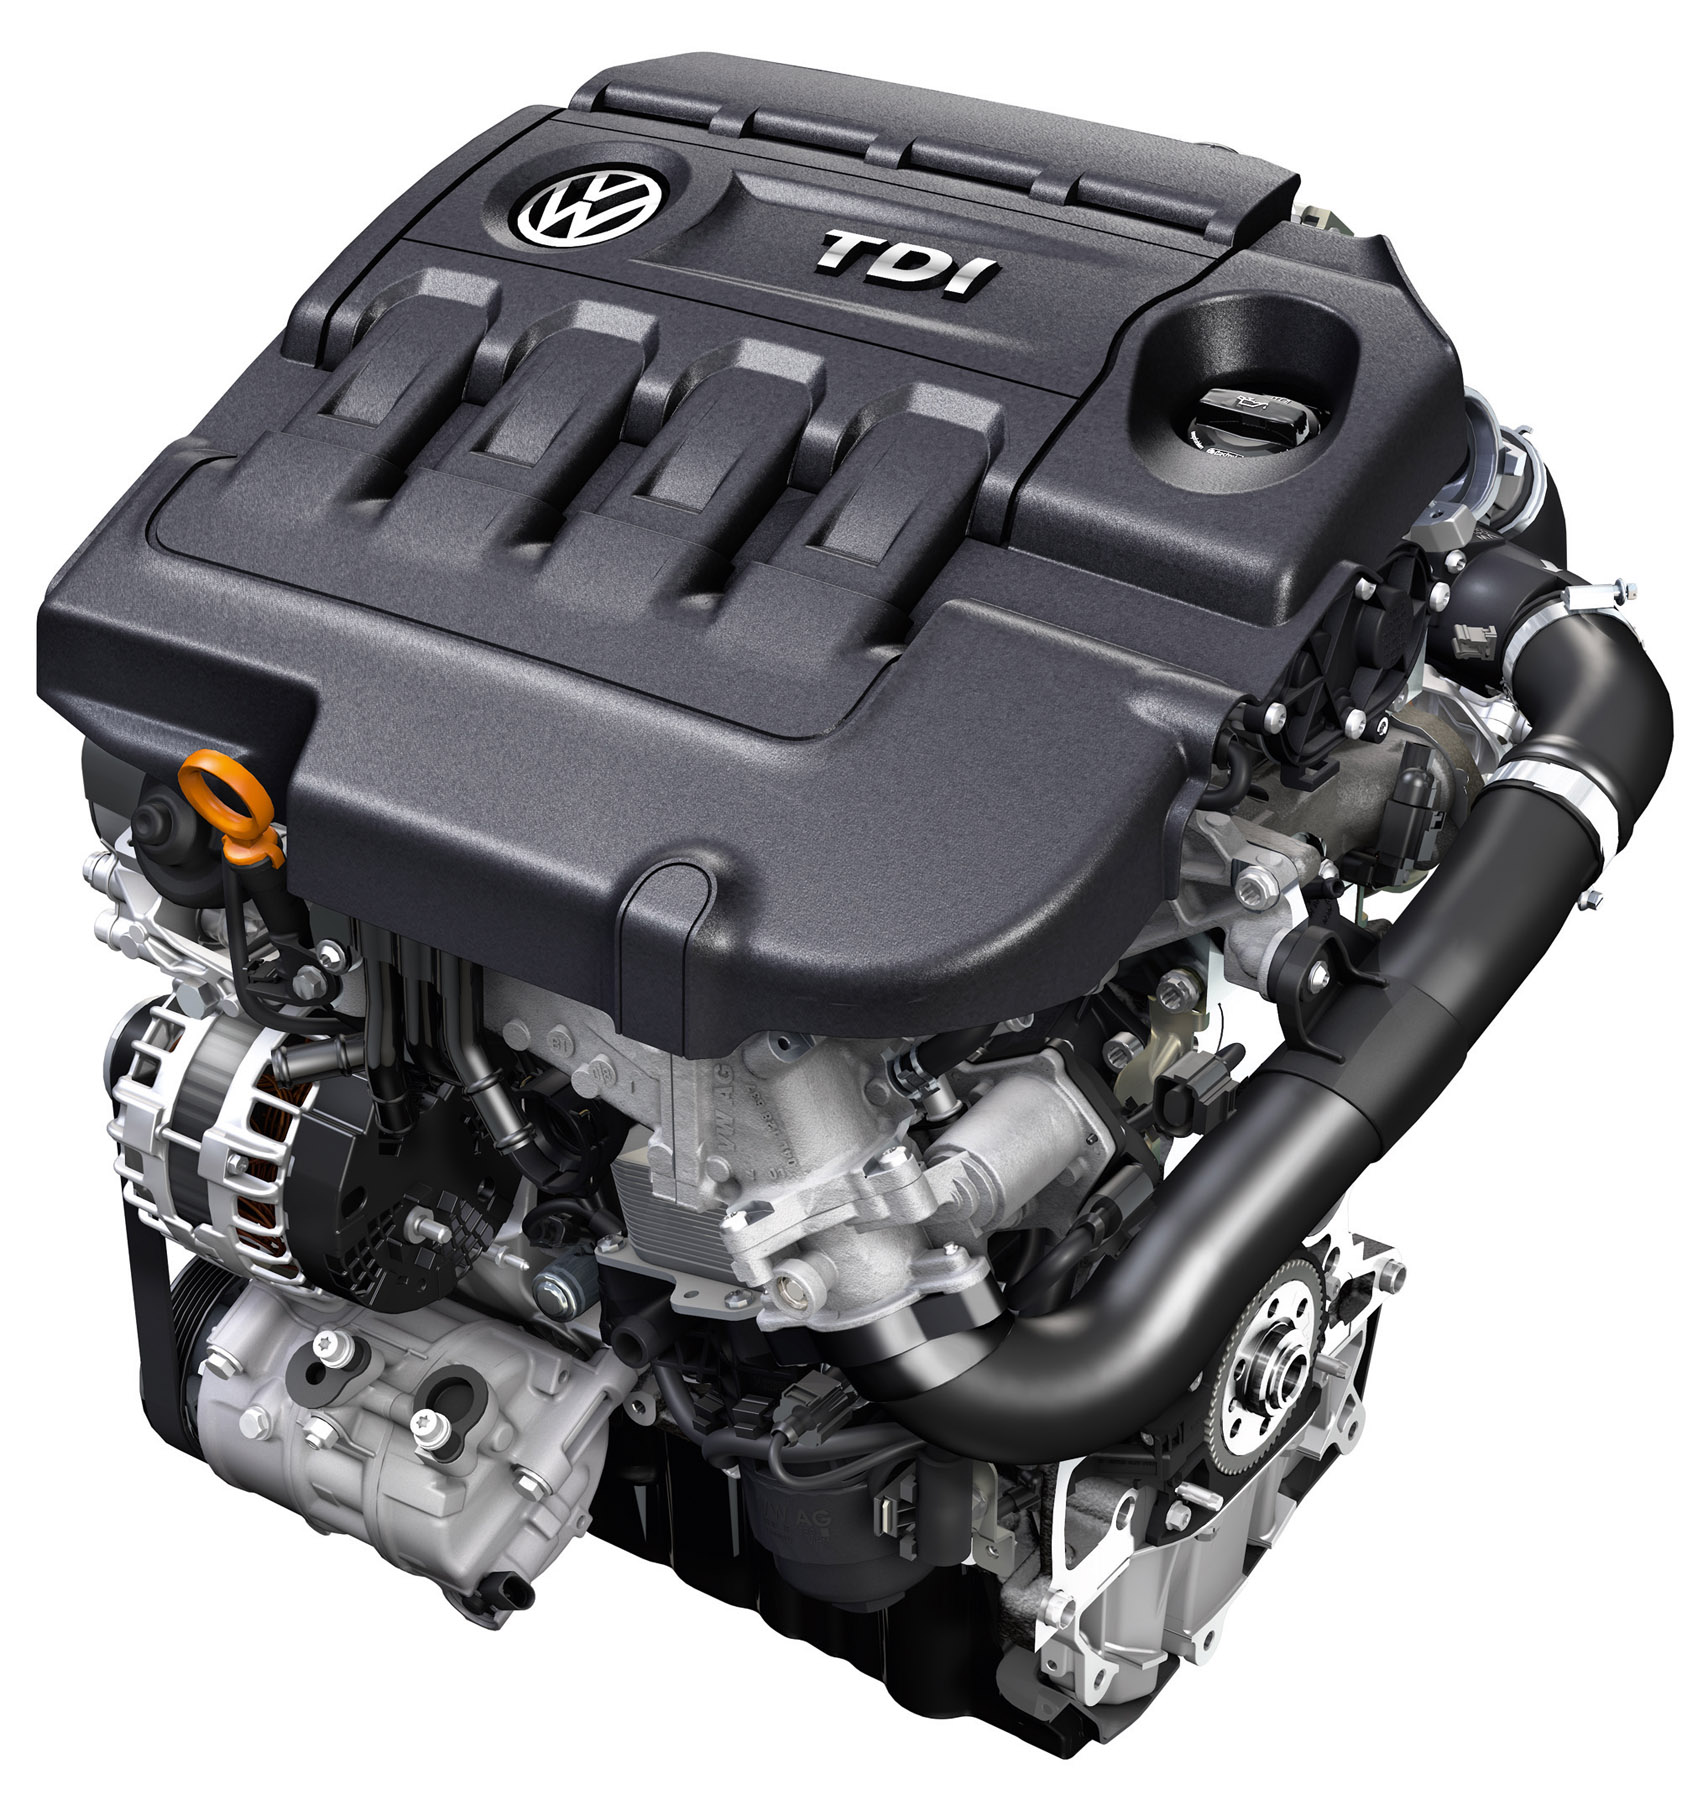 TDI Engine